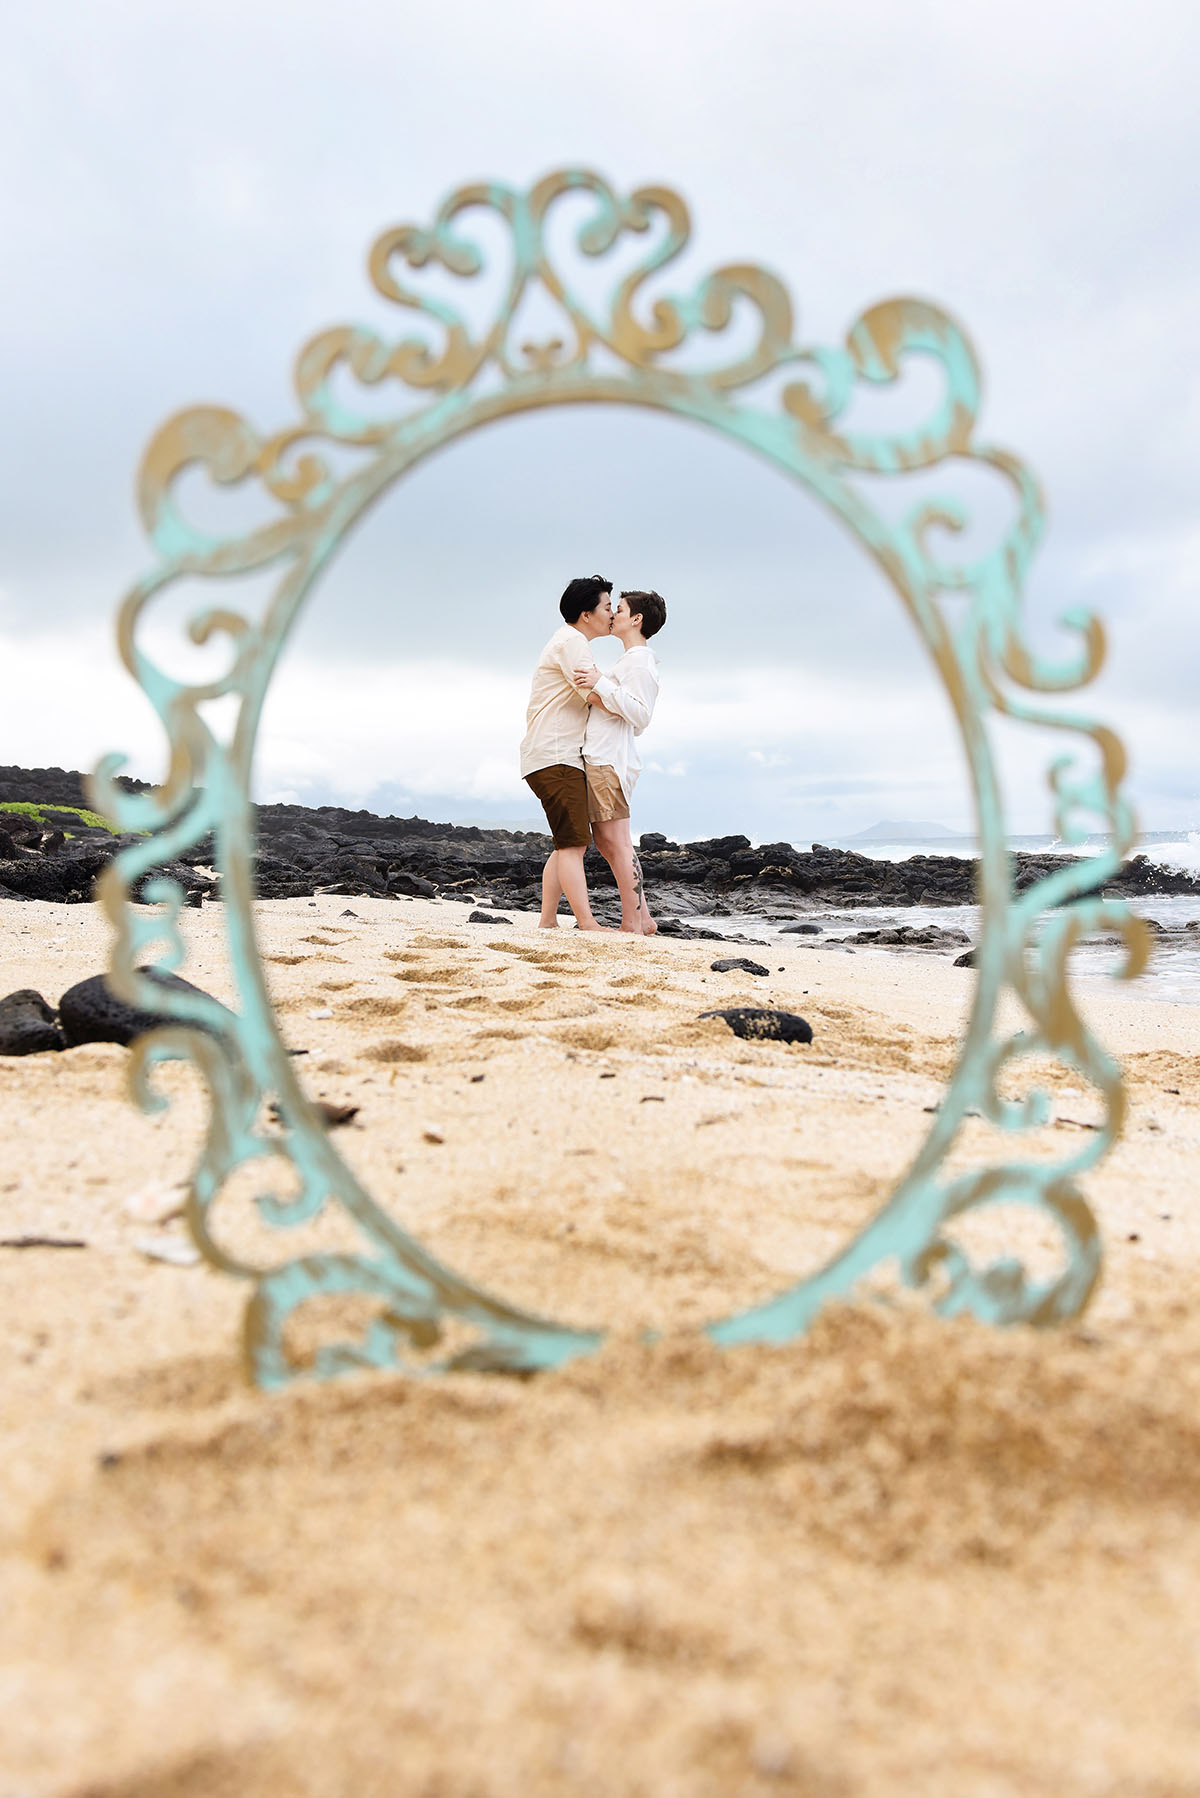 Beach destination wedding and honeymoon in Honolulu, Hawaii LGBTQ+ weddings elopements legal ceremony courthouse cliffside ocean